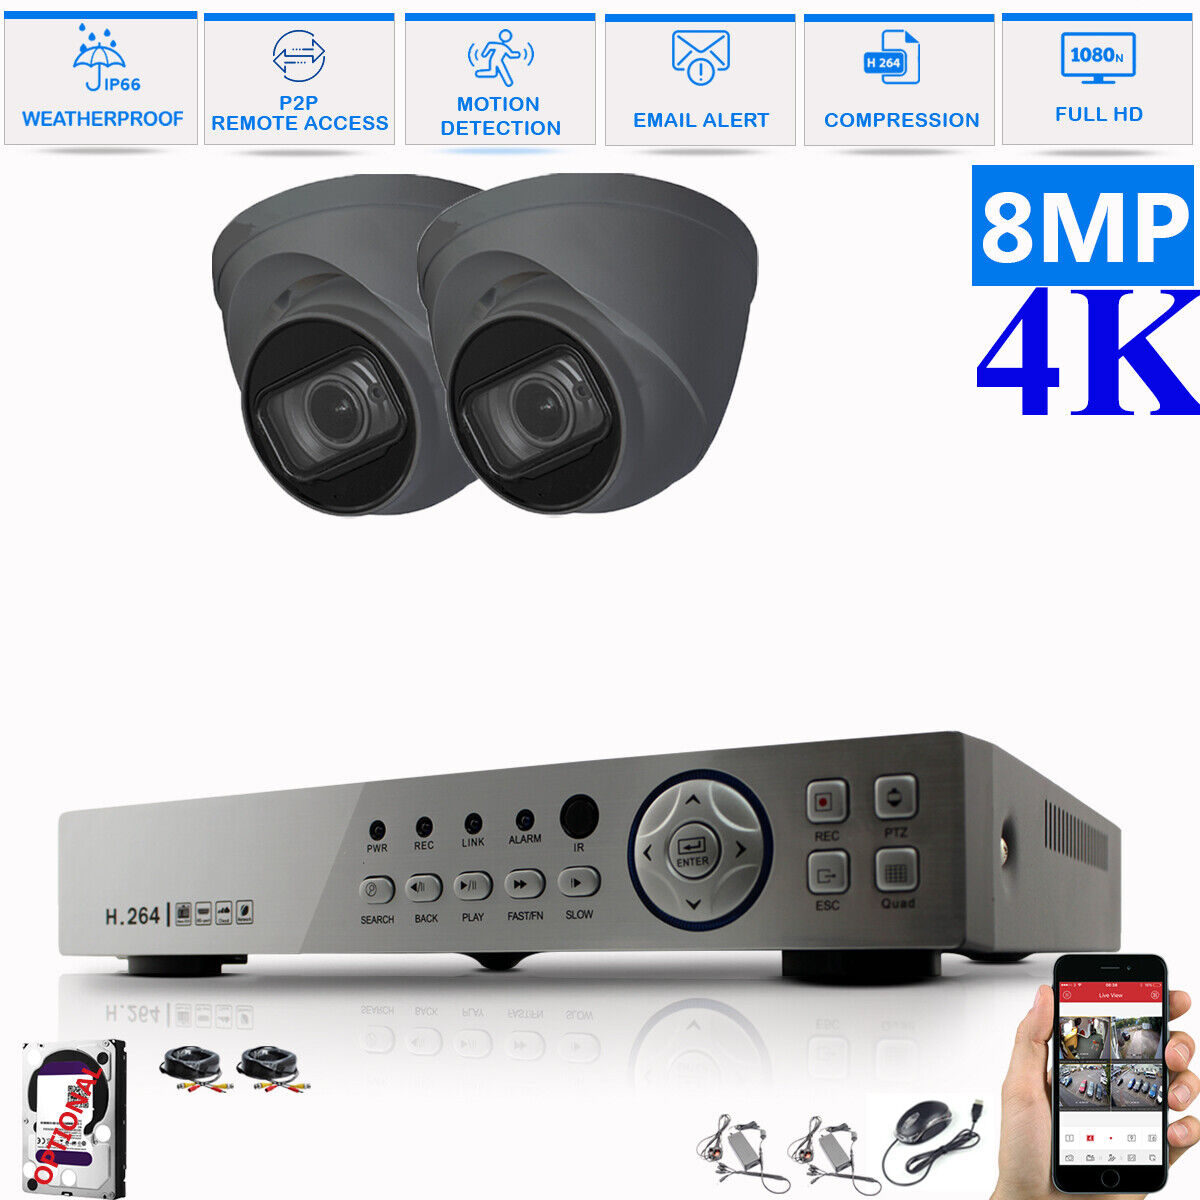 8MP CCTV 4K KIT DVR SYSTEM OUTDOOR ULTRA HD HOME CAMERA SECURITY KIT NIGHTVISION 4CH DVR 2xCameras (gray) 1TB HDD